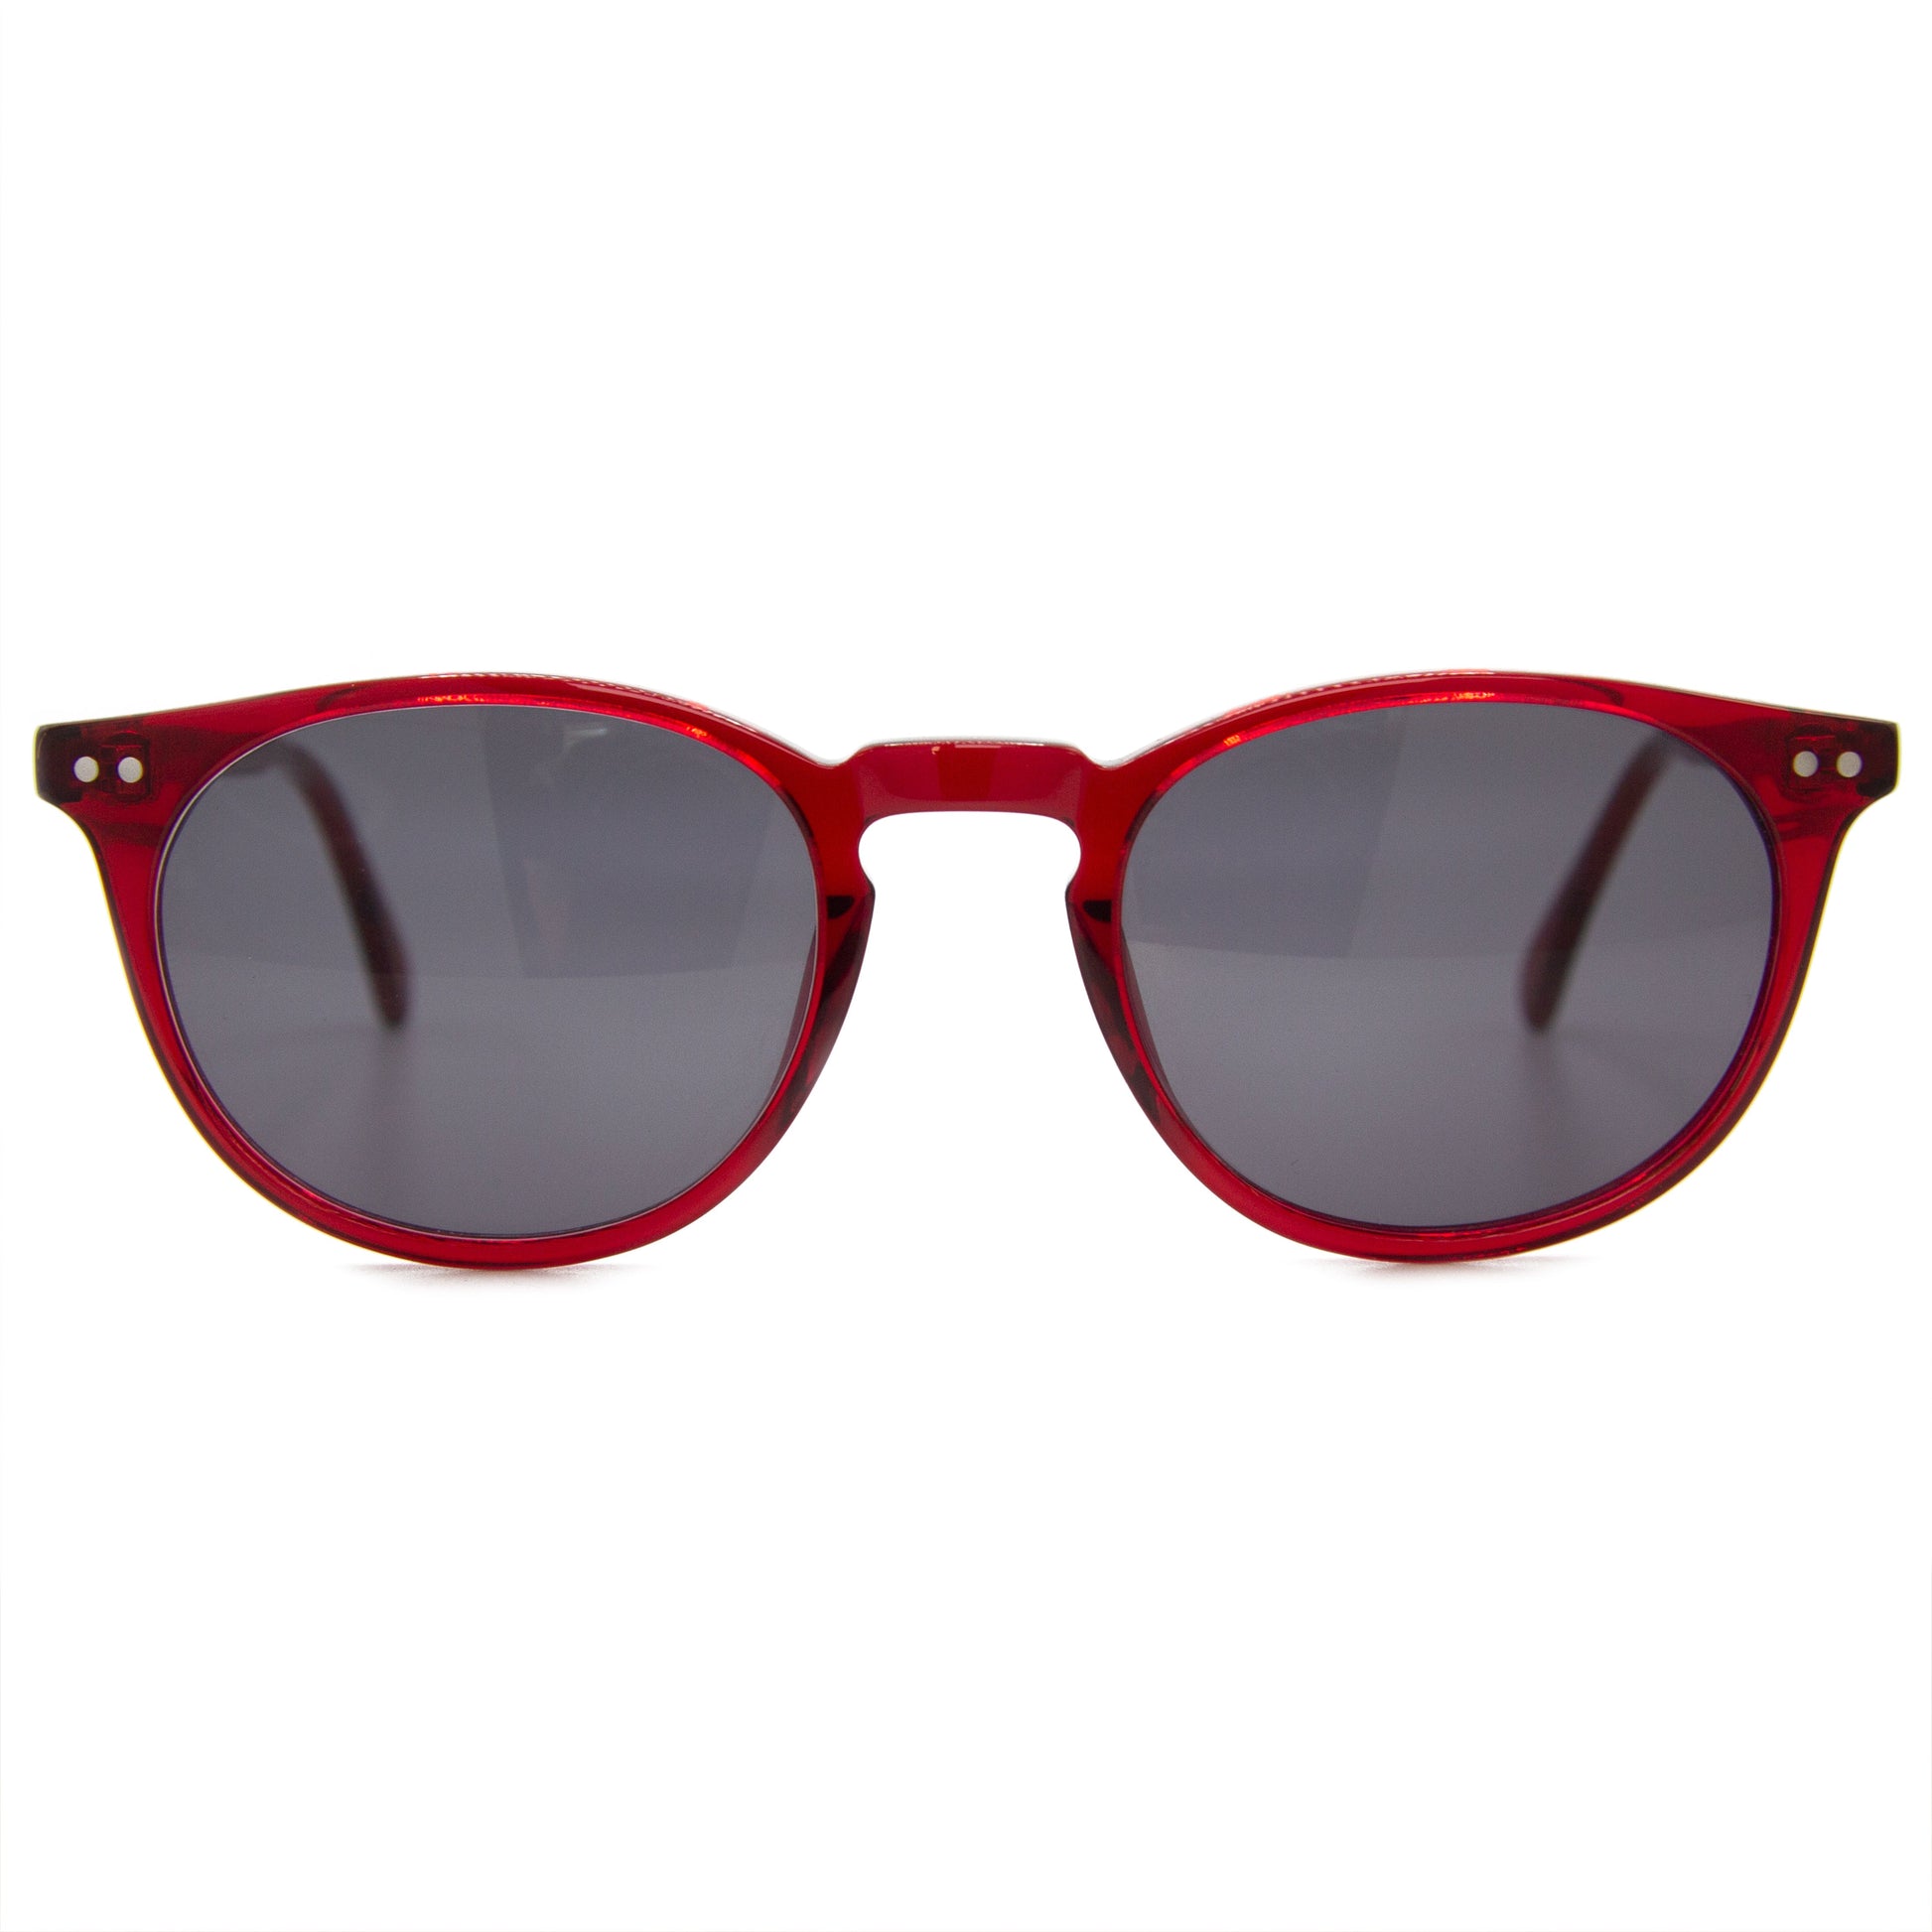 Small Round Red Sunglasses